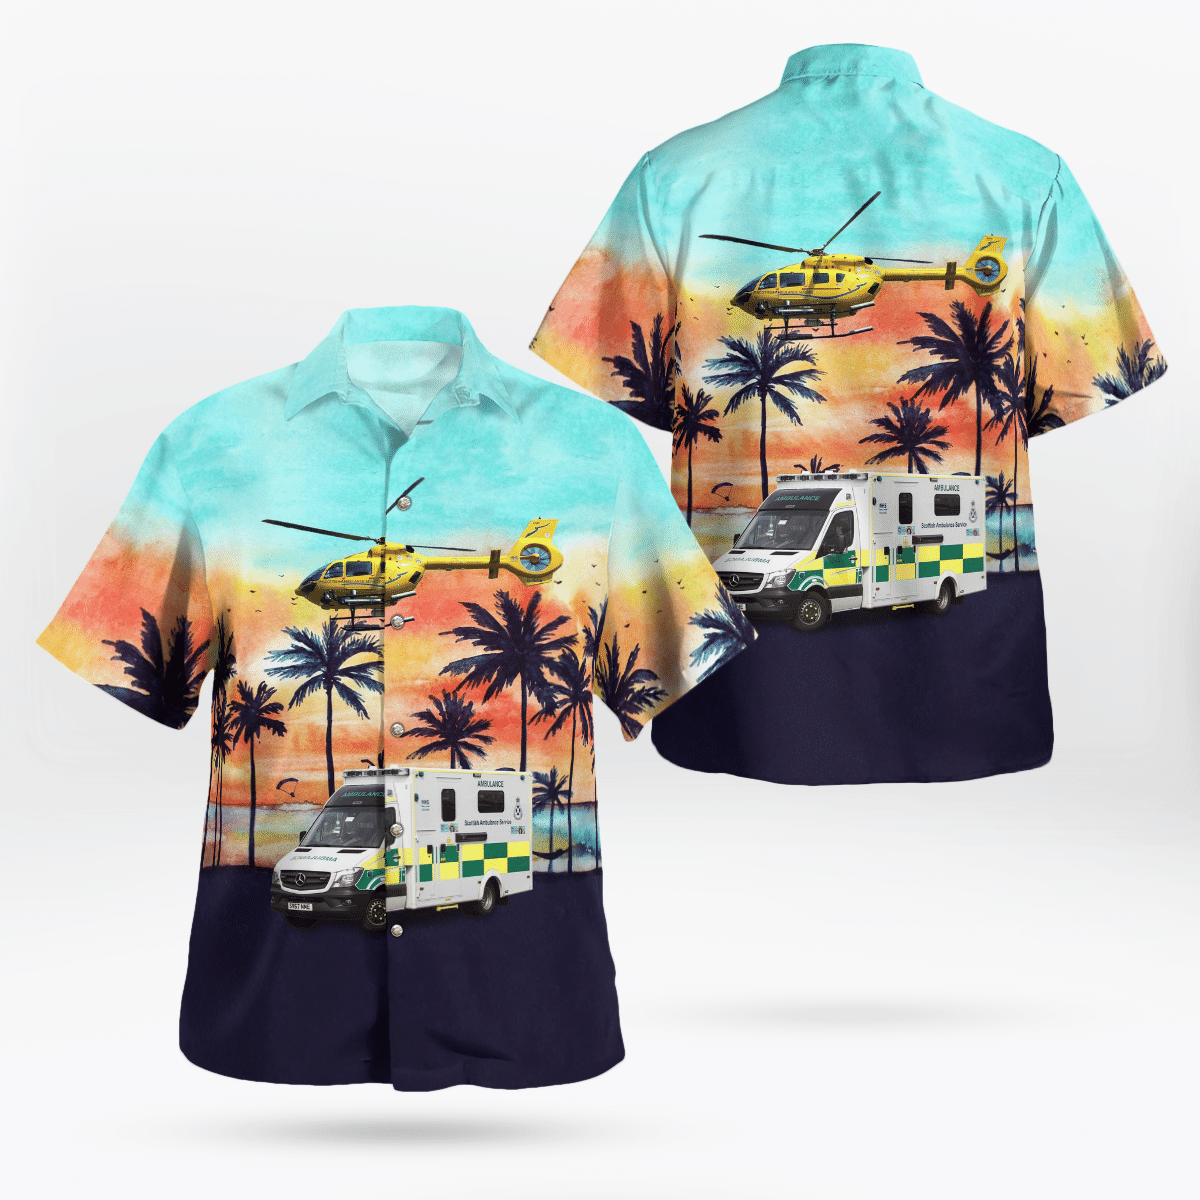 Great summer beachwear for you 98